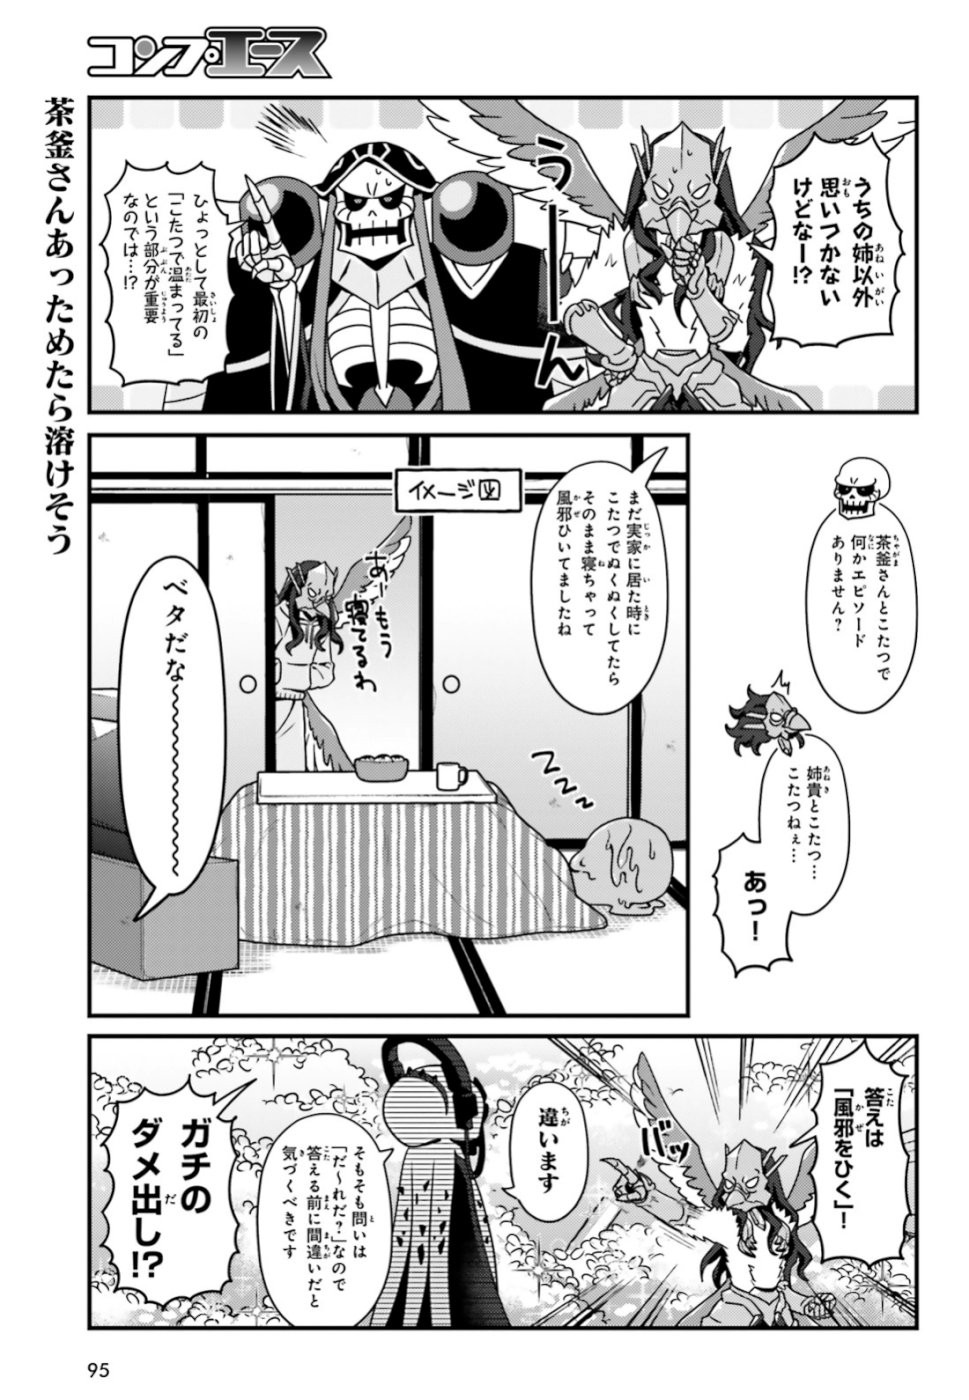 Overlord-Fushisha-no-Oh - Chapter 32-1 - Page 19